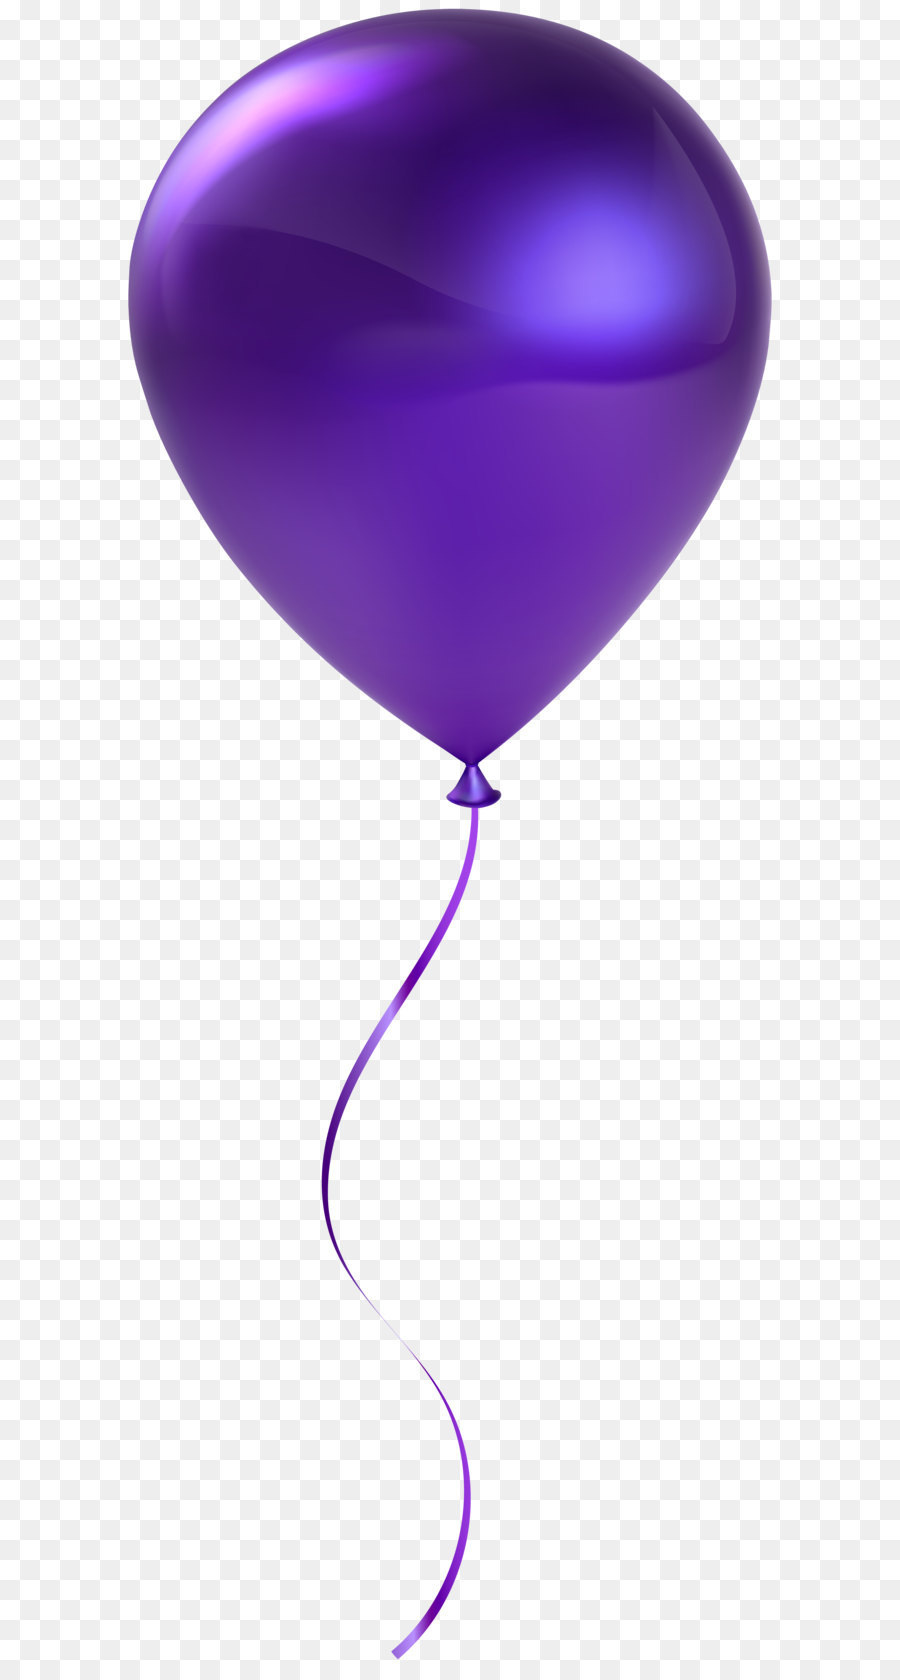 Purple Balloon - Single Purple Balloon Transparent Clip Art png download - 3118*8000 - Free Transparent Balloon png Download.